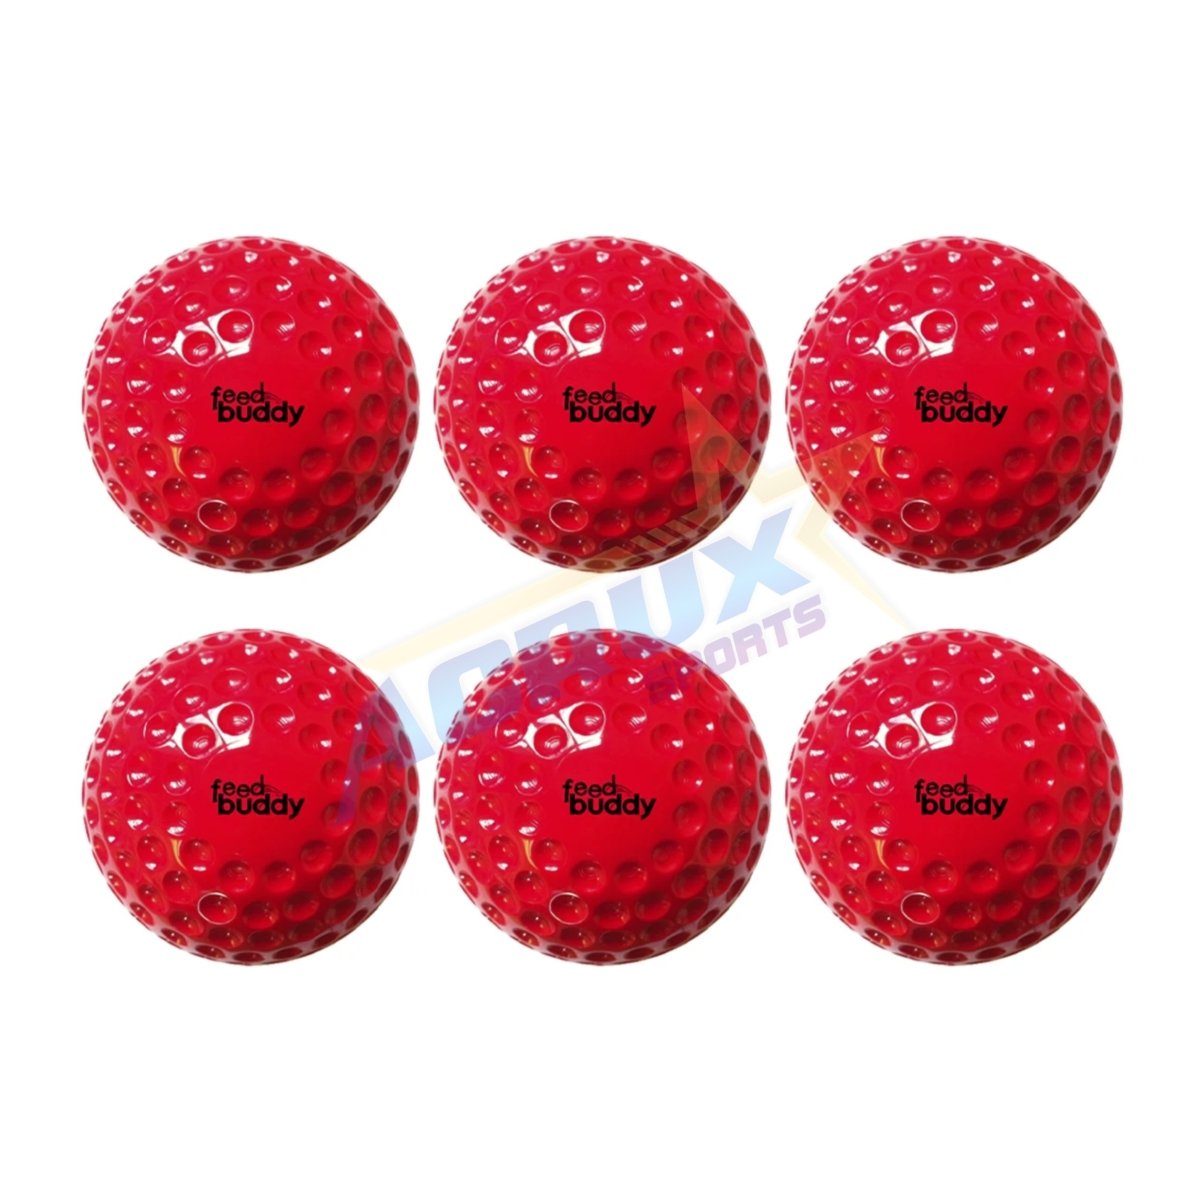 Speed Buddy Soft balls (Pack of 6)